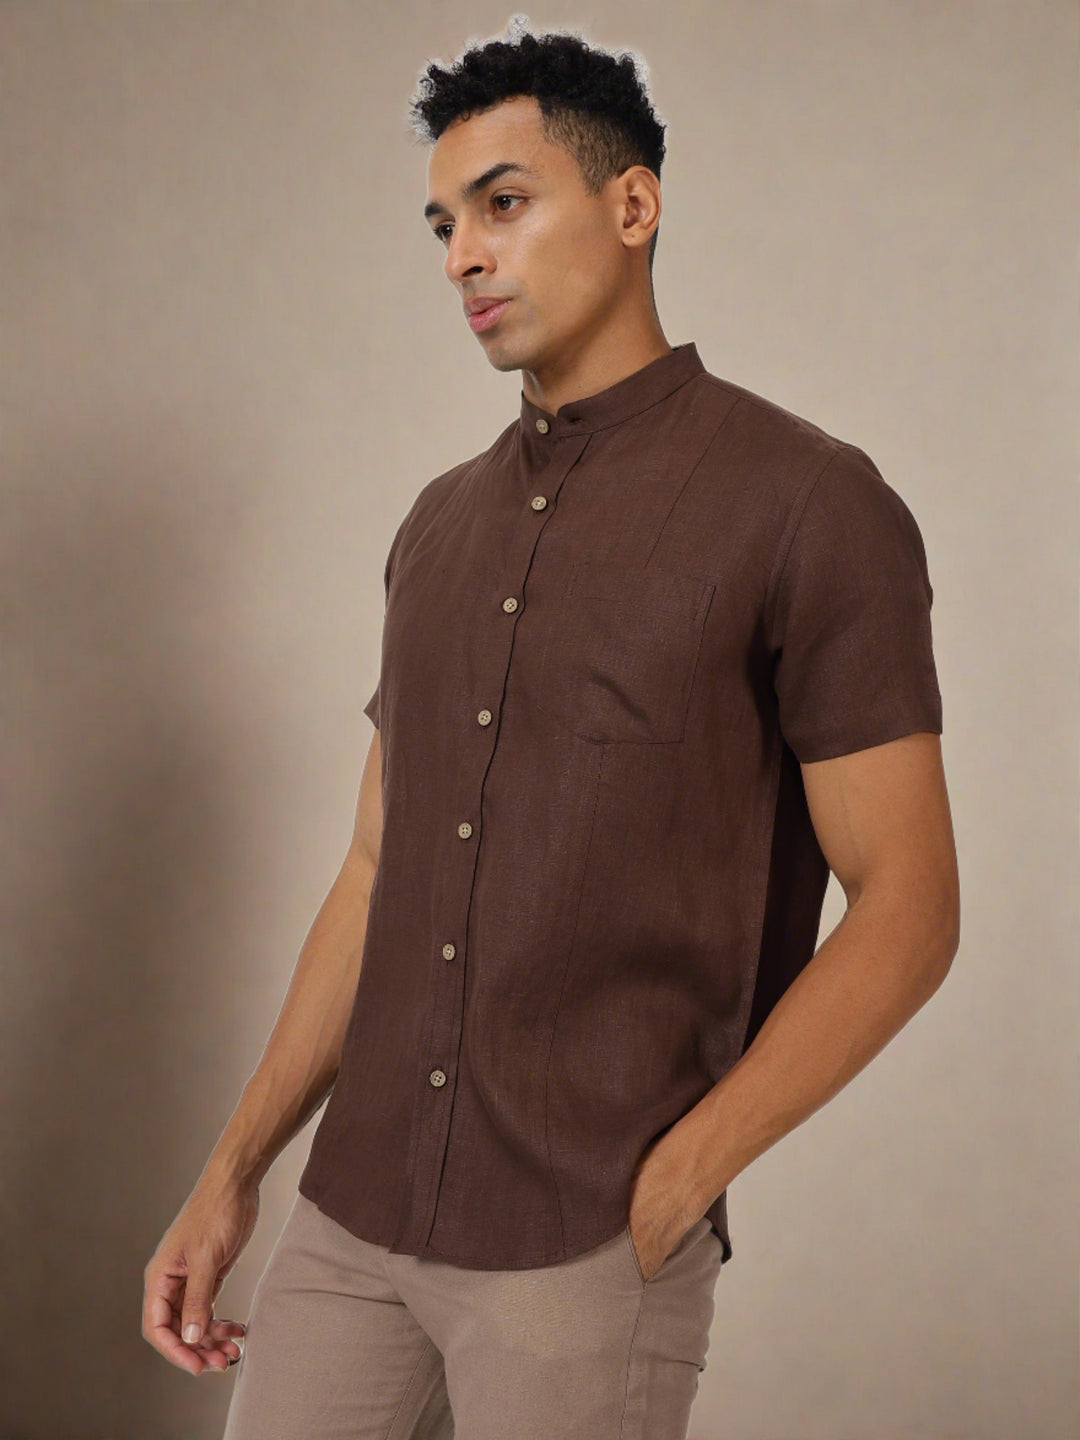 Greyish brown mandarin collar shirt by UNTUNG